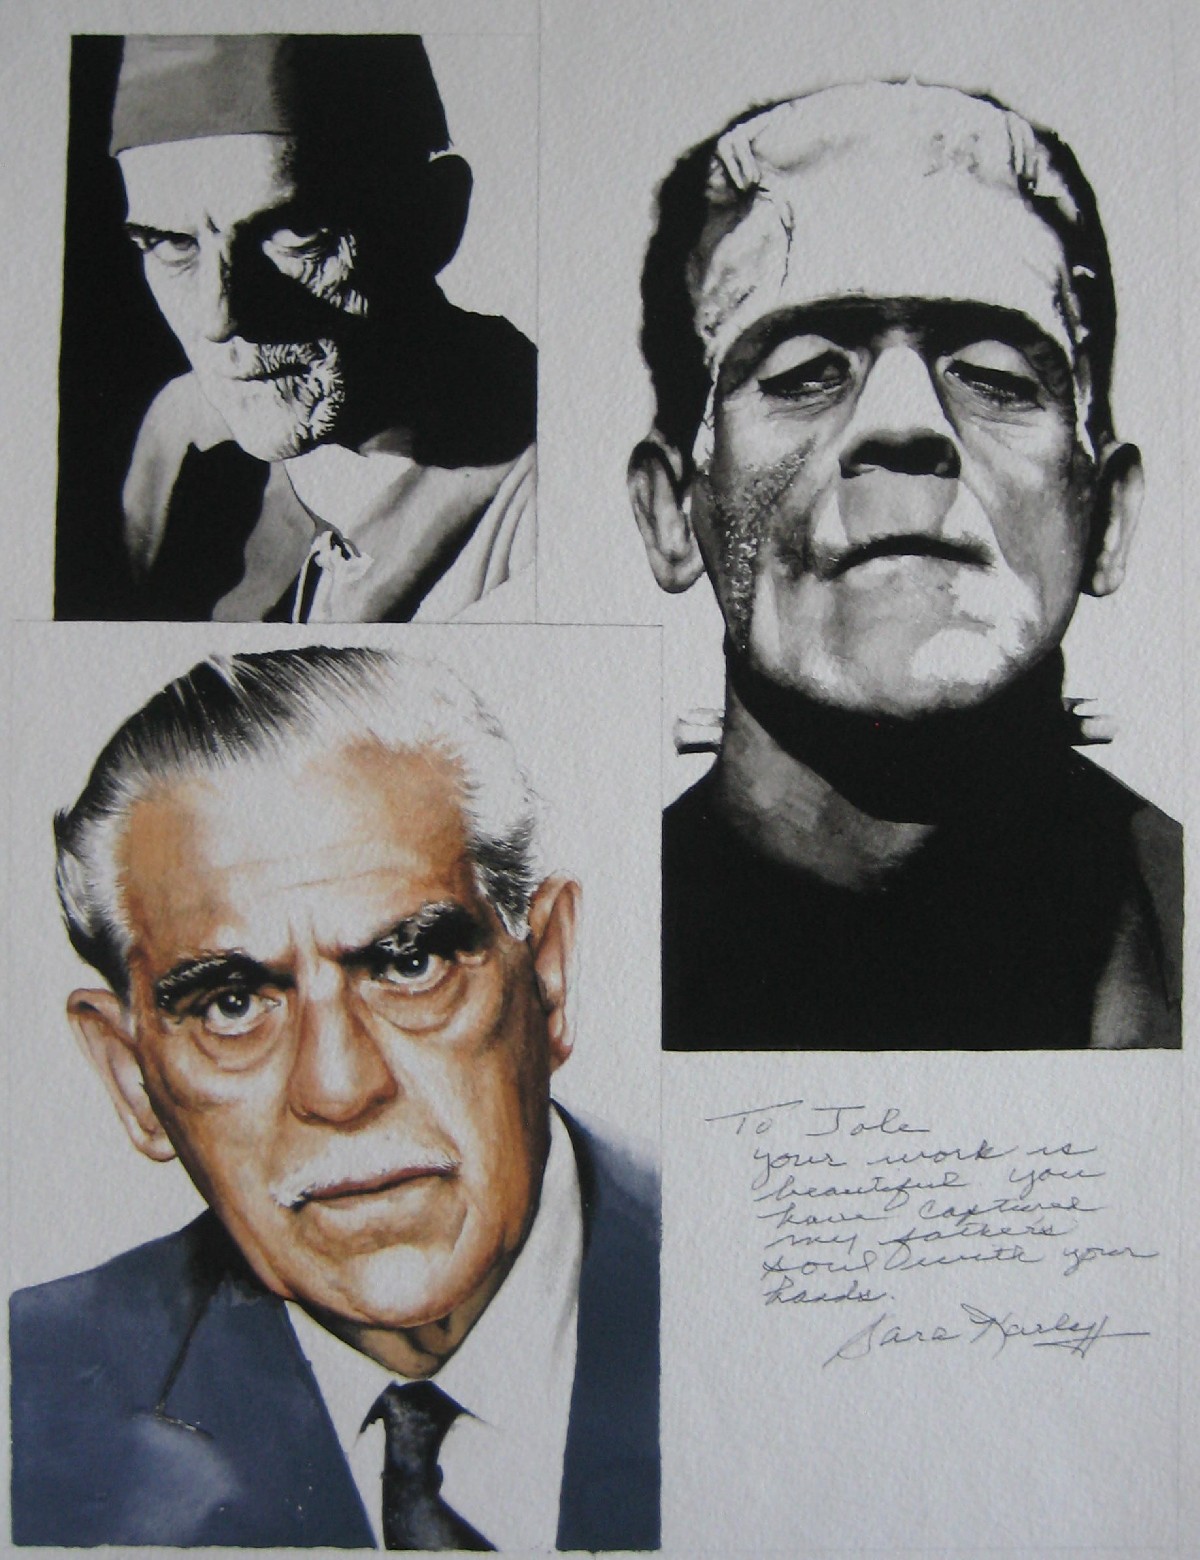 Boris Karloff Jole Stamenkovc signedportraits 